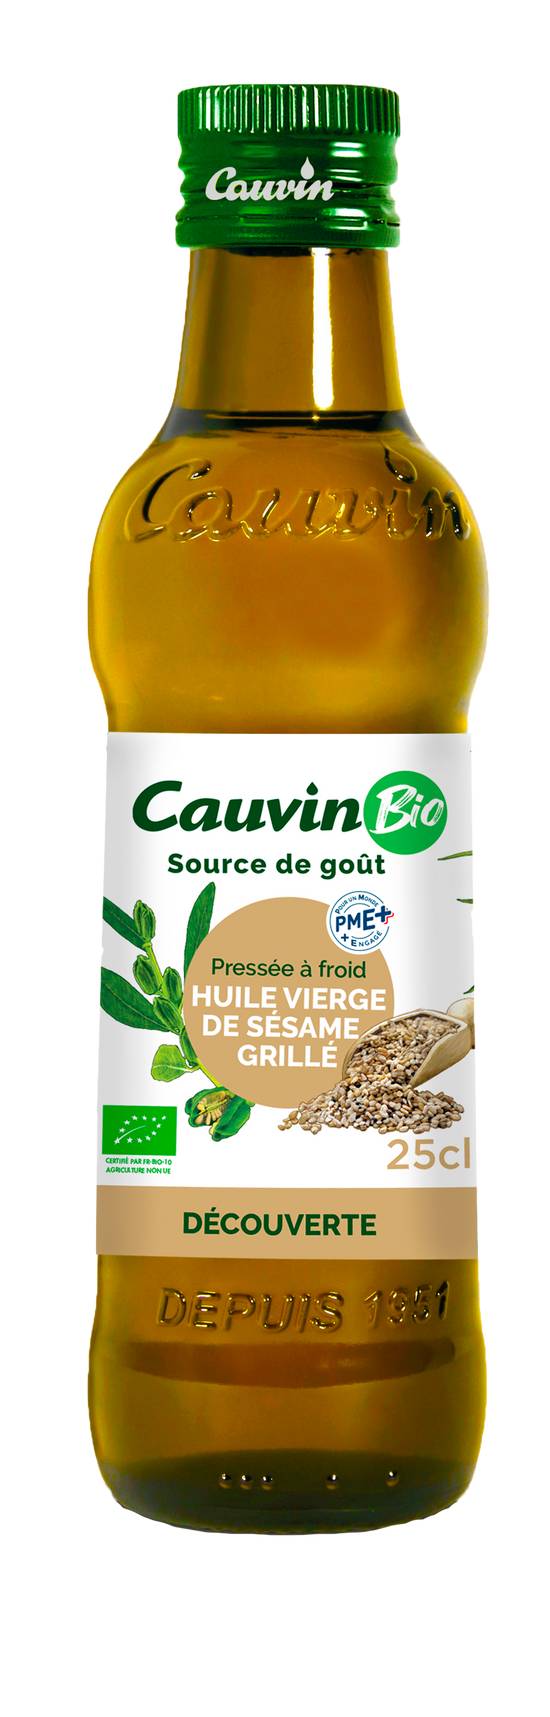 Cauvin - Huile vierge de sésame grillé bio (250 ml)